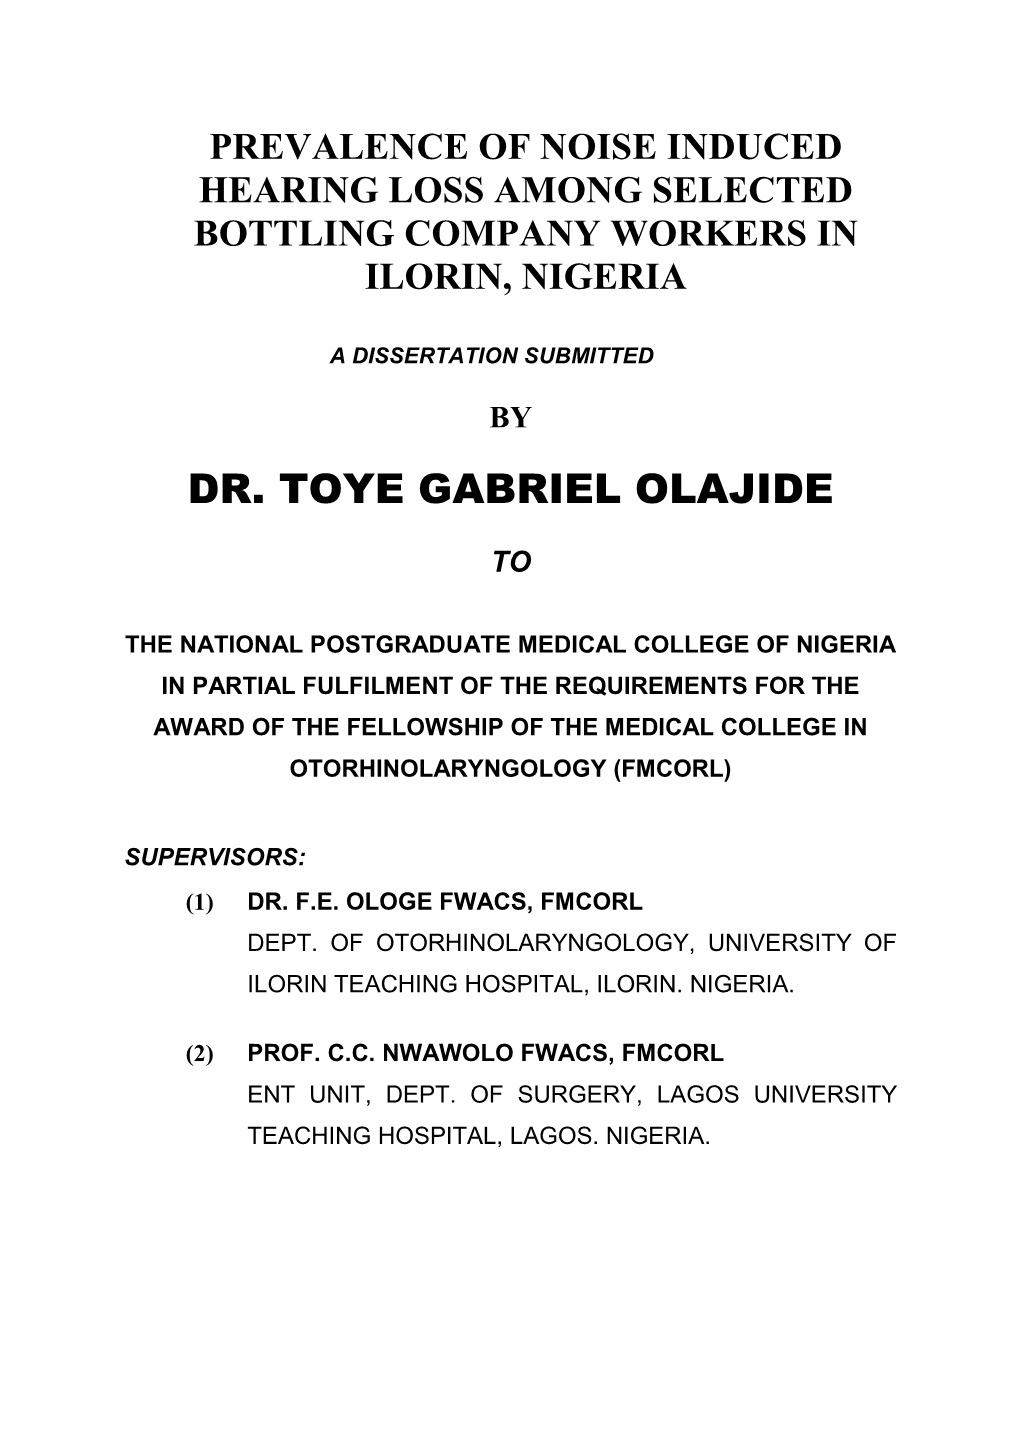 Dr. Toye Gabriel Olajide